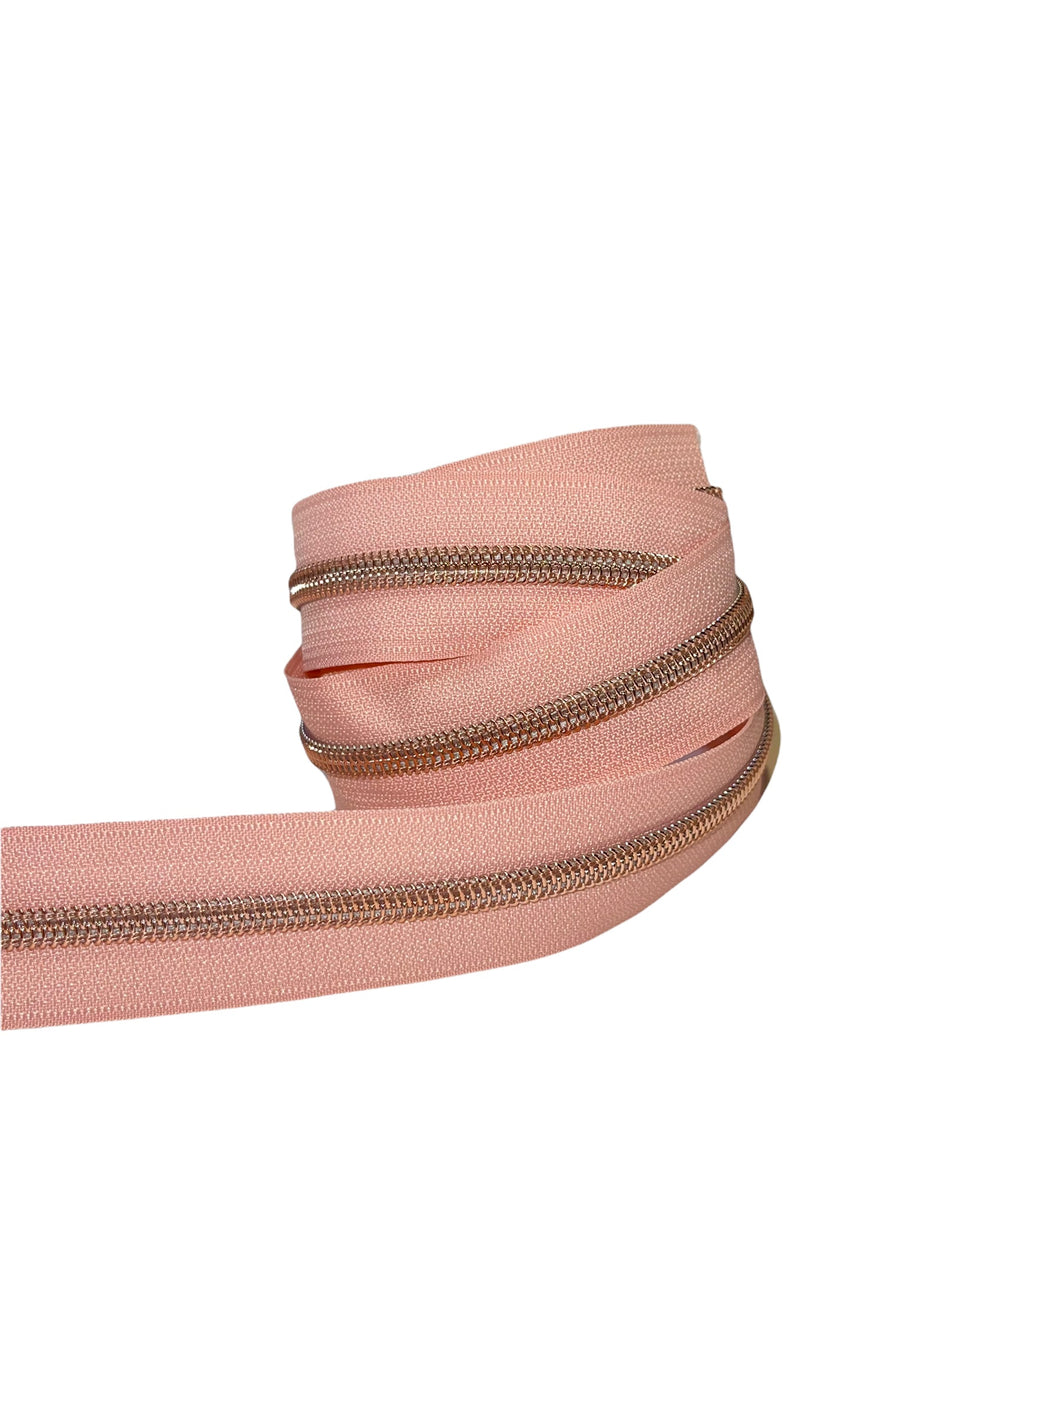 #5 Nylon Zipper Tape - Light Pink Rose Gold - by the yard